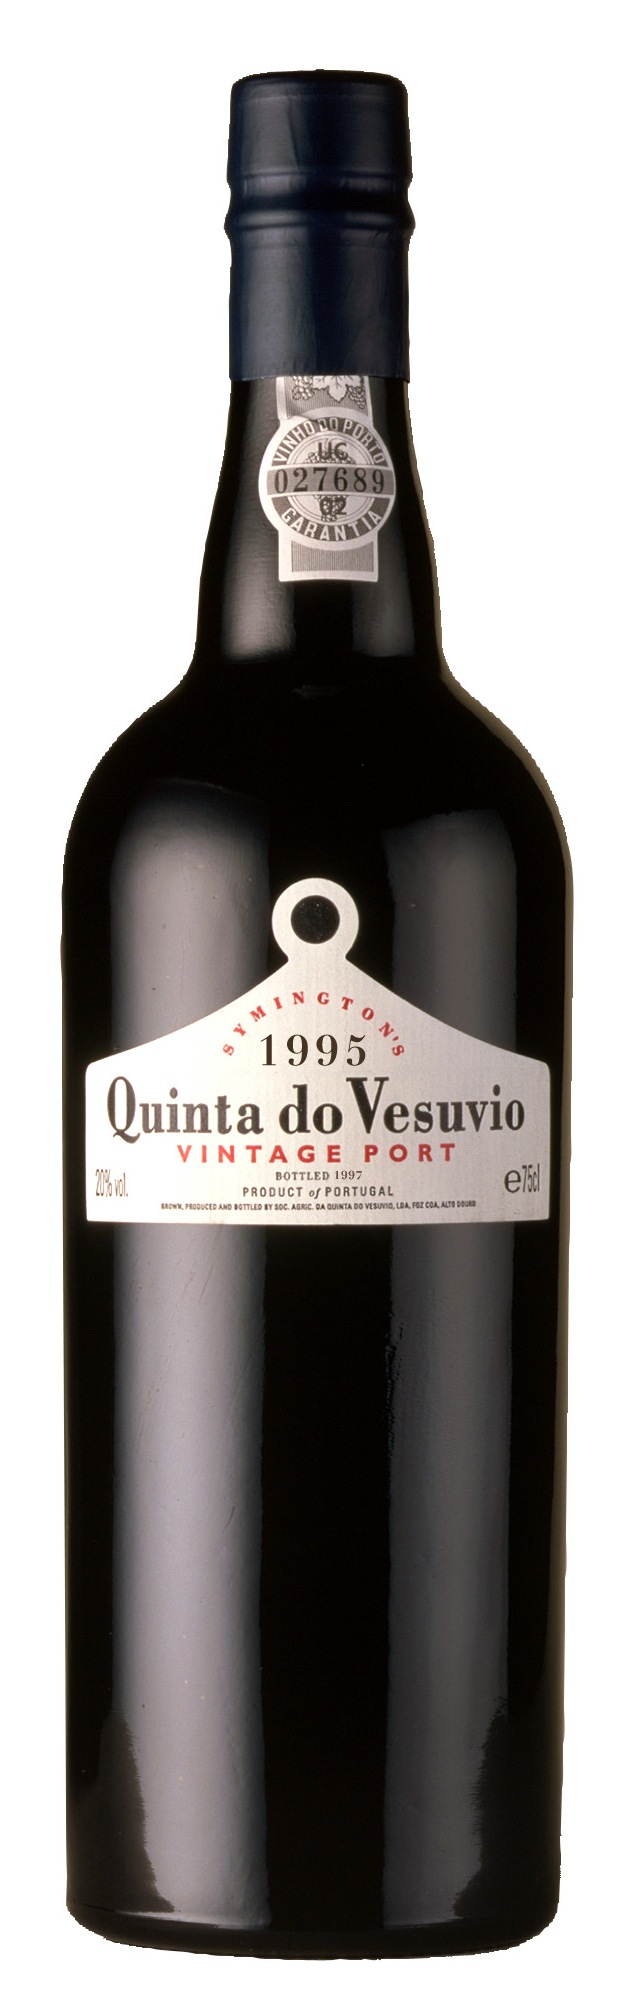 Product Image for QUINTA DO VESUVIO VINTAGE PORT 1995